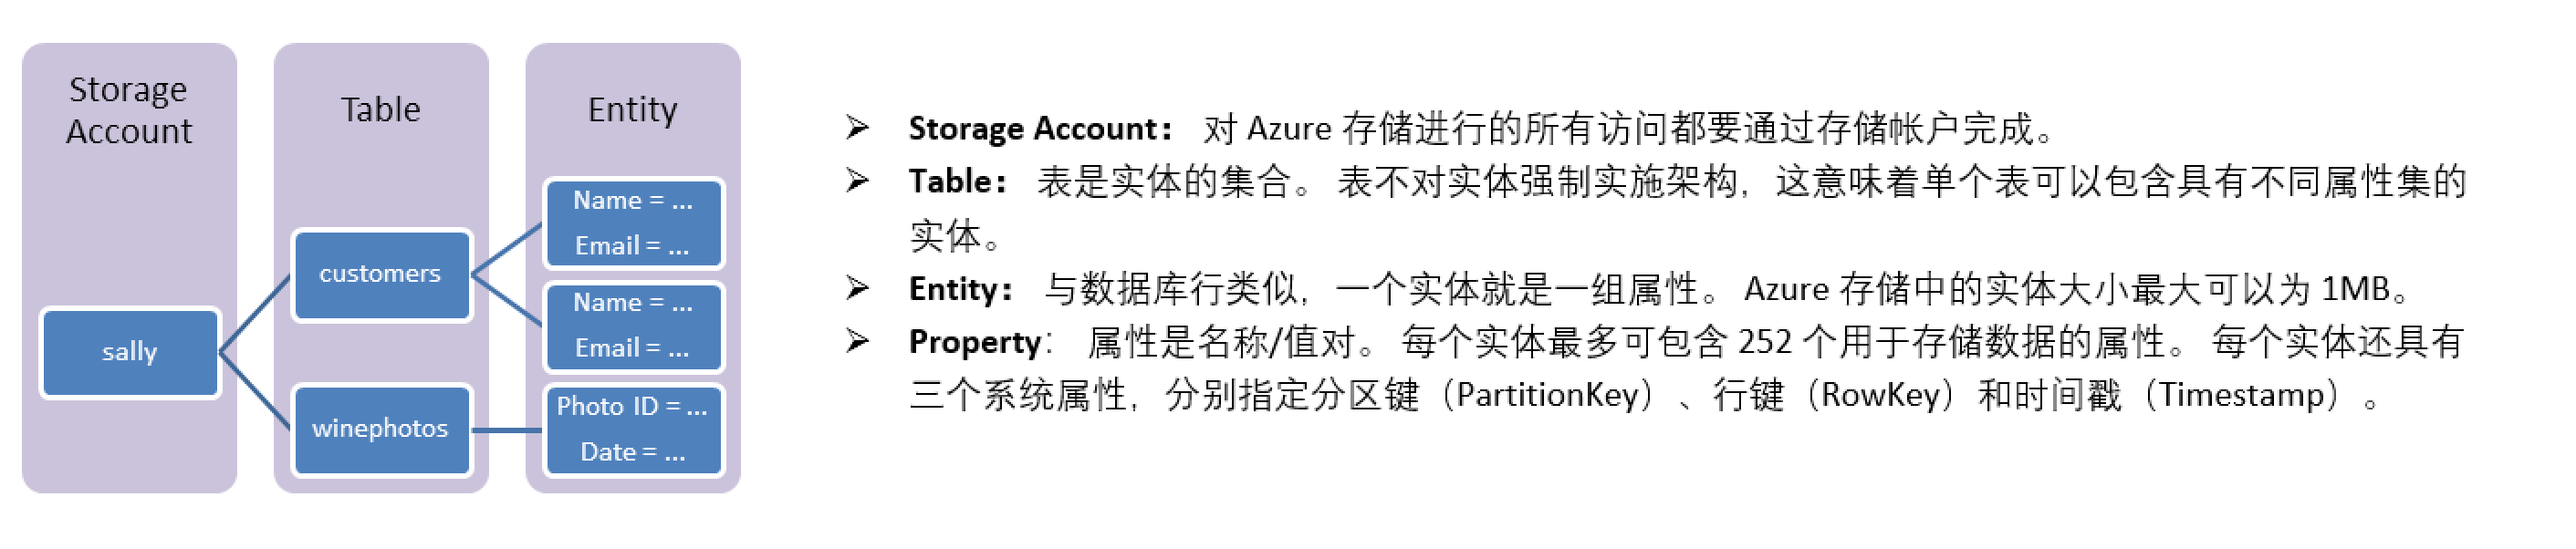 【Azure 存储服务】Python模块(azure.cosmosdb.table)直接对表存储(Storage Account Table)做操作示例